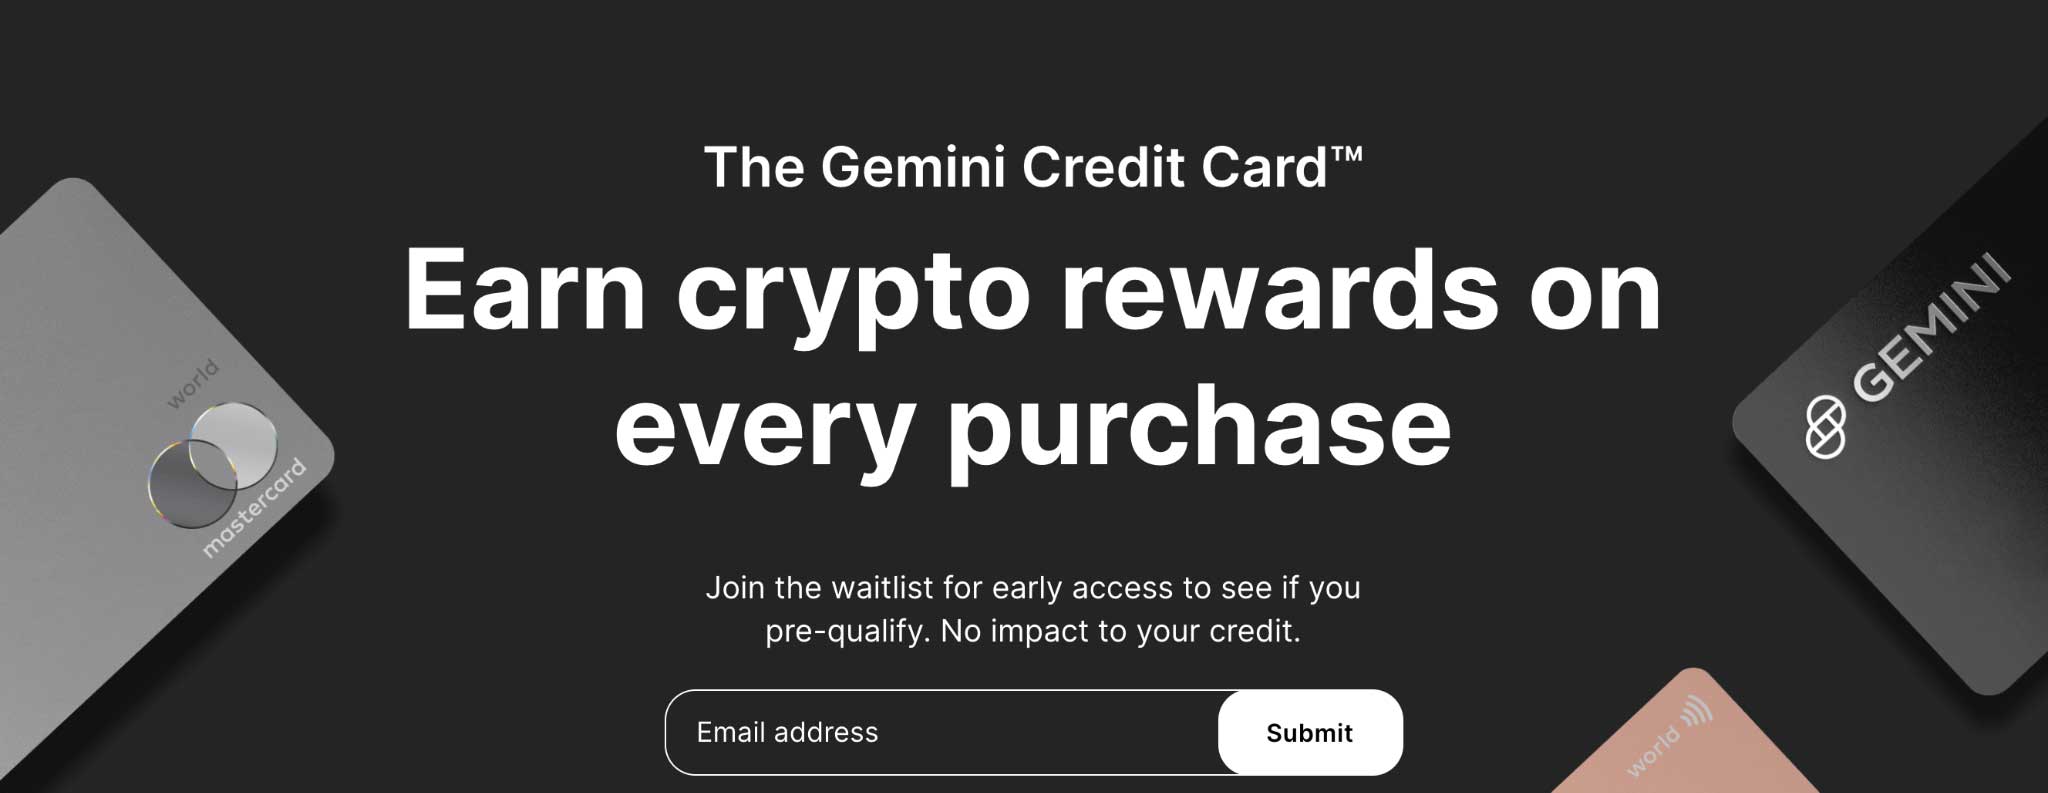 Gemini Referral Code xegklz9ux Gives a $10 BTC Bonus!